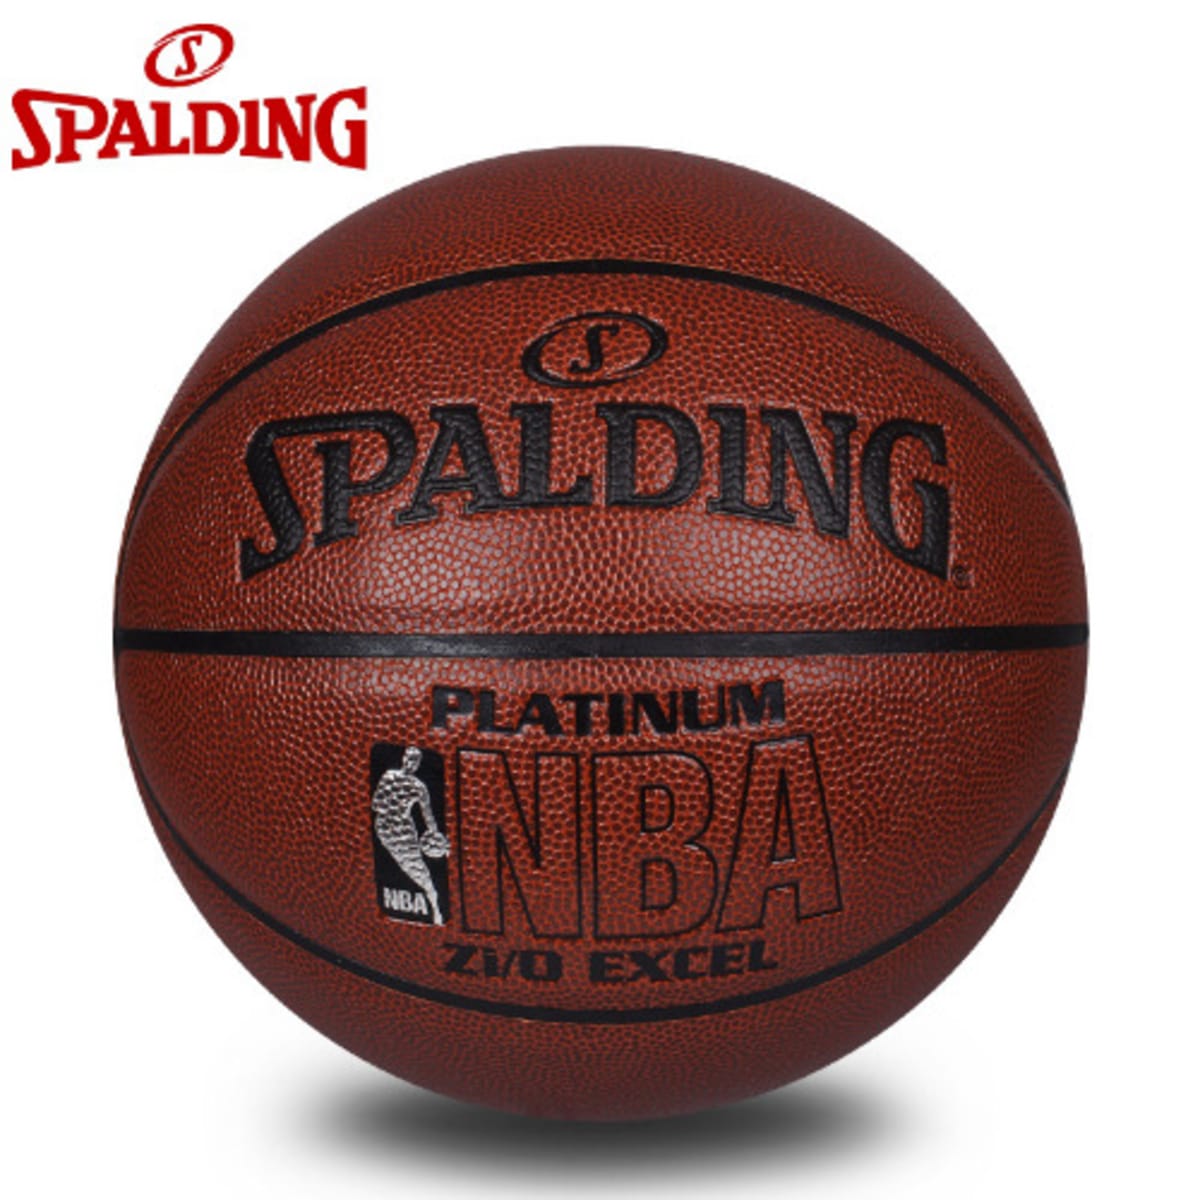 Spalding Nba Basketball Online | Shopping Konga Professional